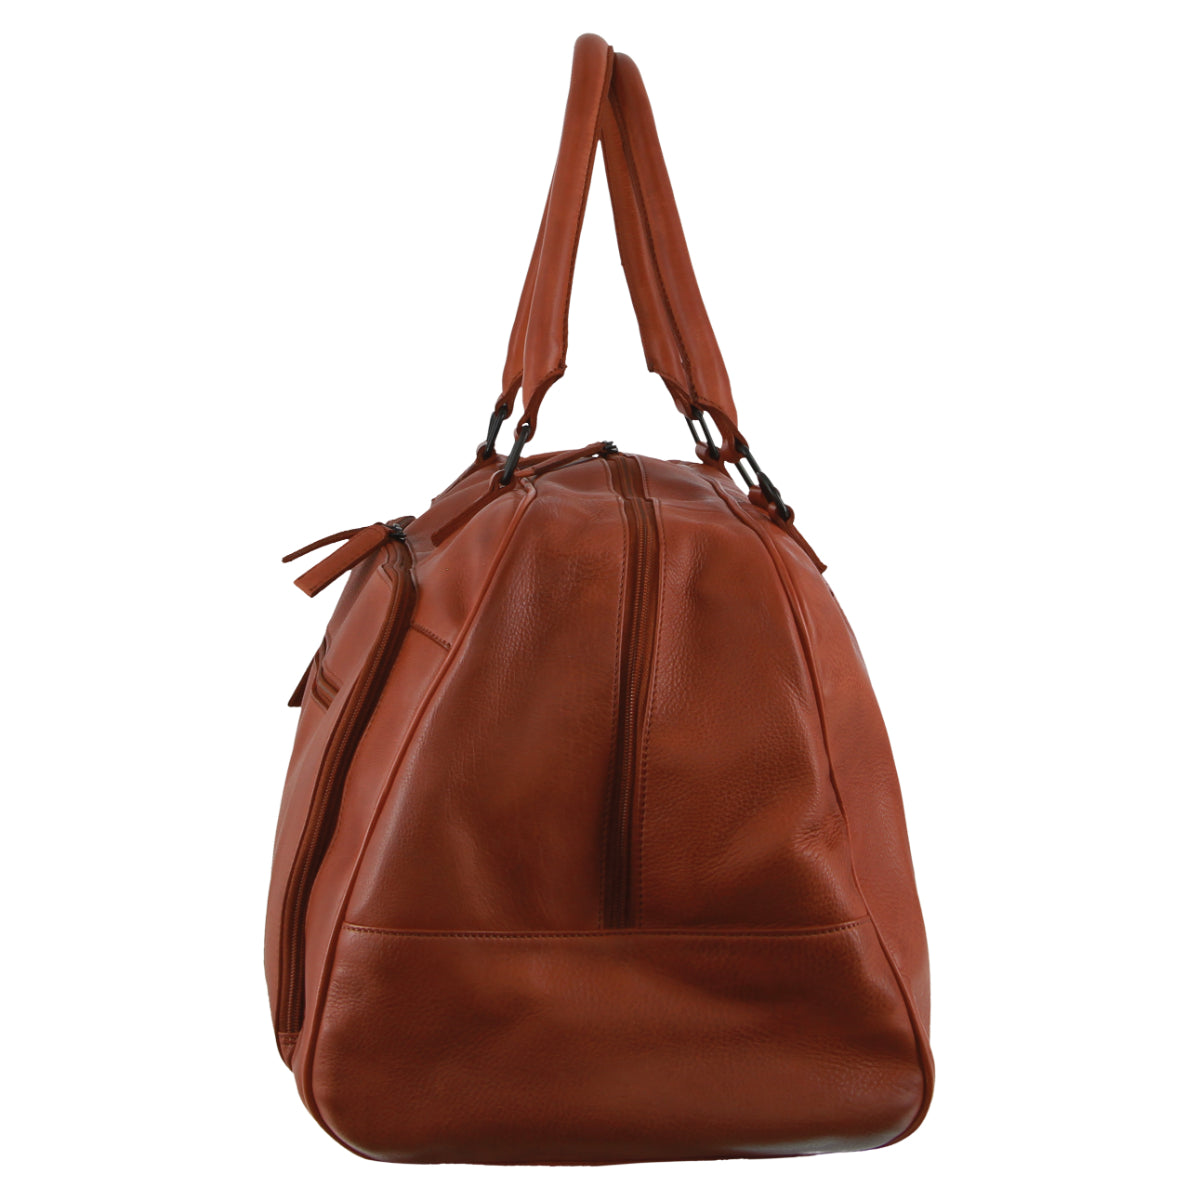 Pierre Cardin Leather Business/Overnight Bag in Cognac